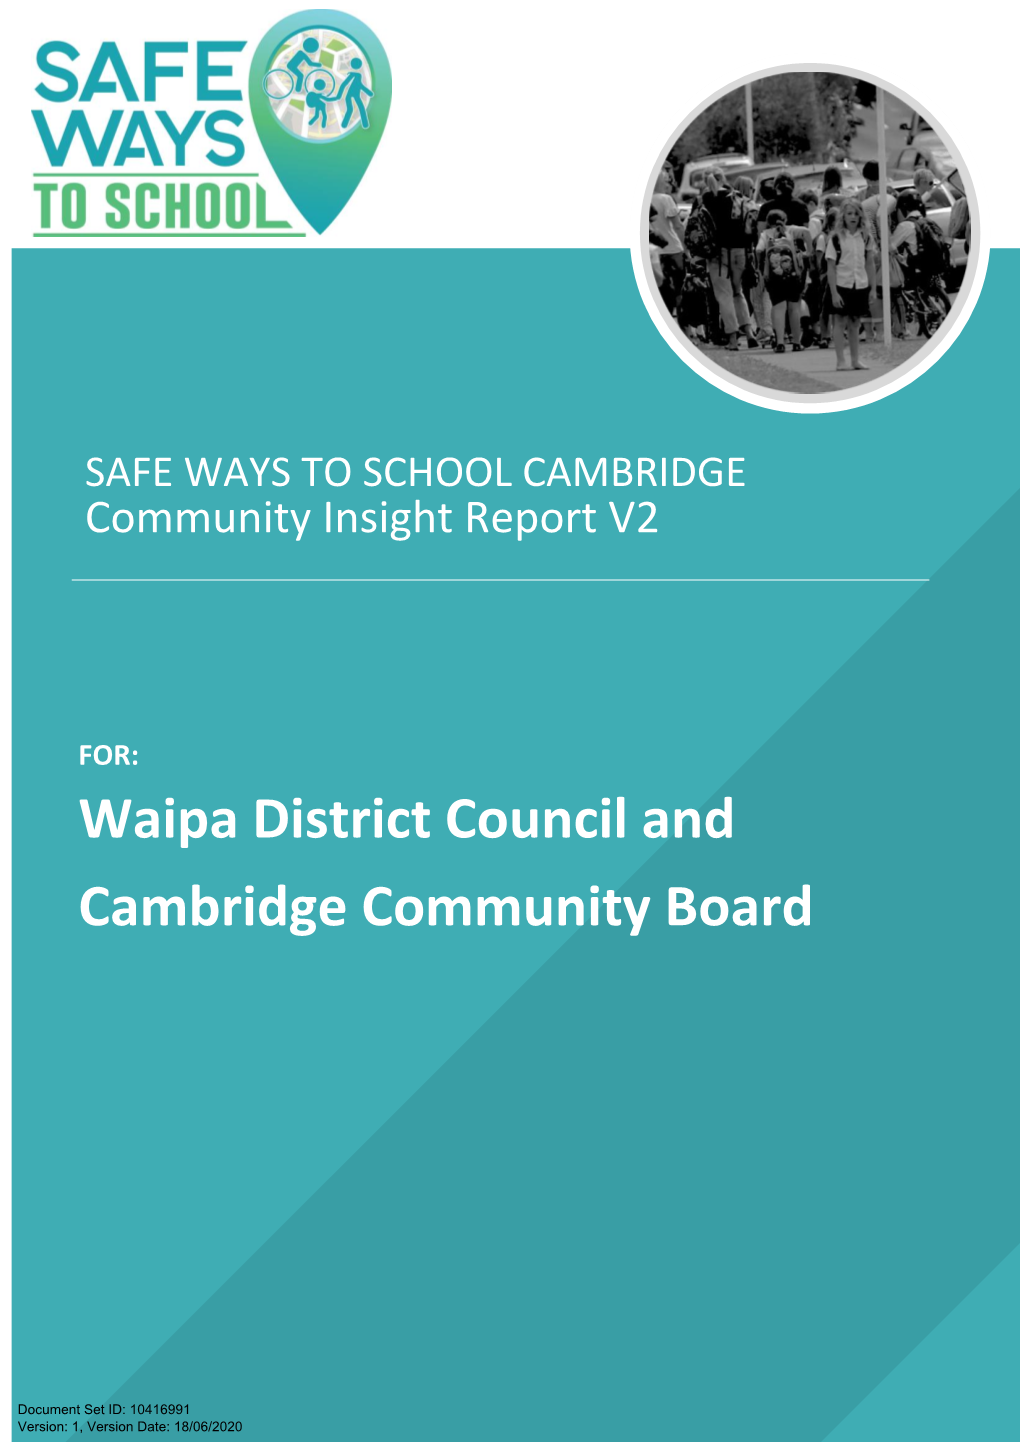 Waipa District Council and Cambridge Community Board